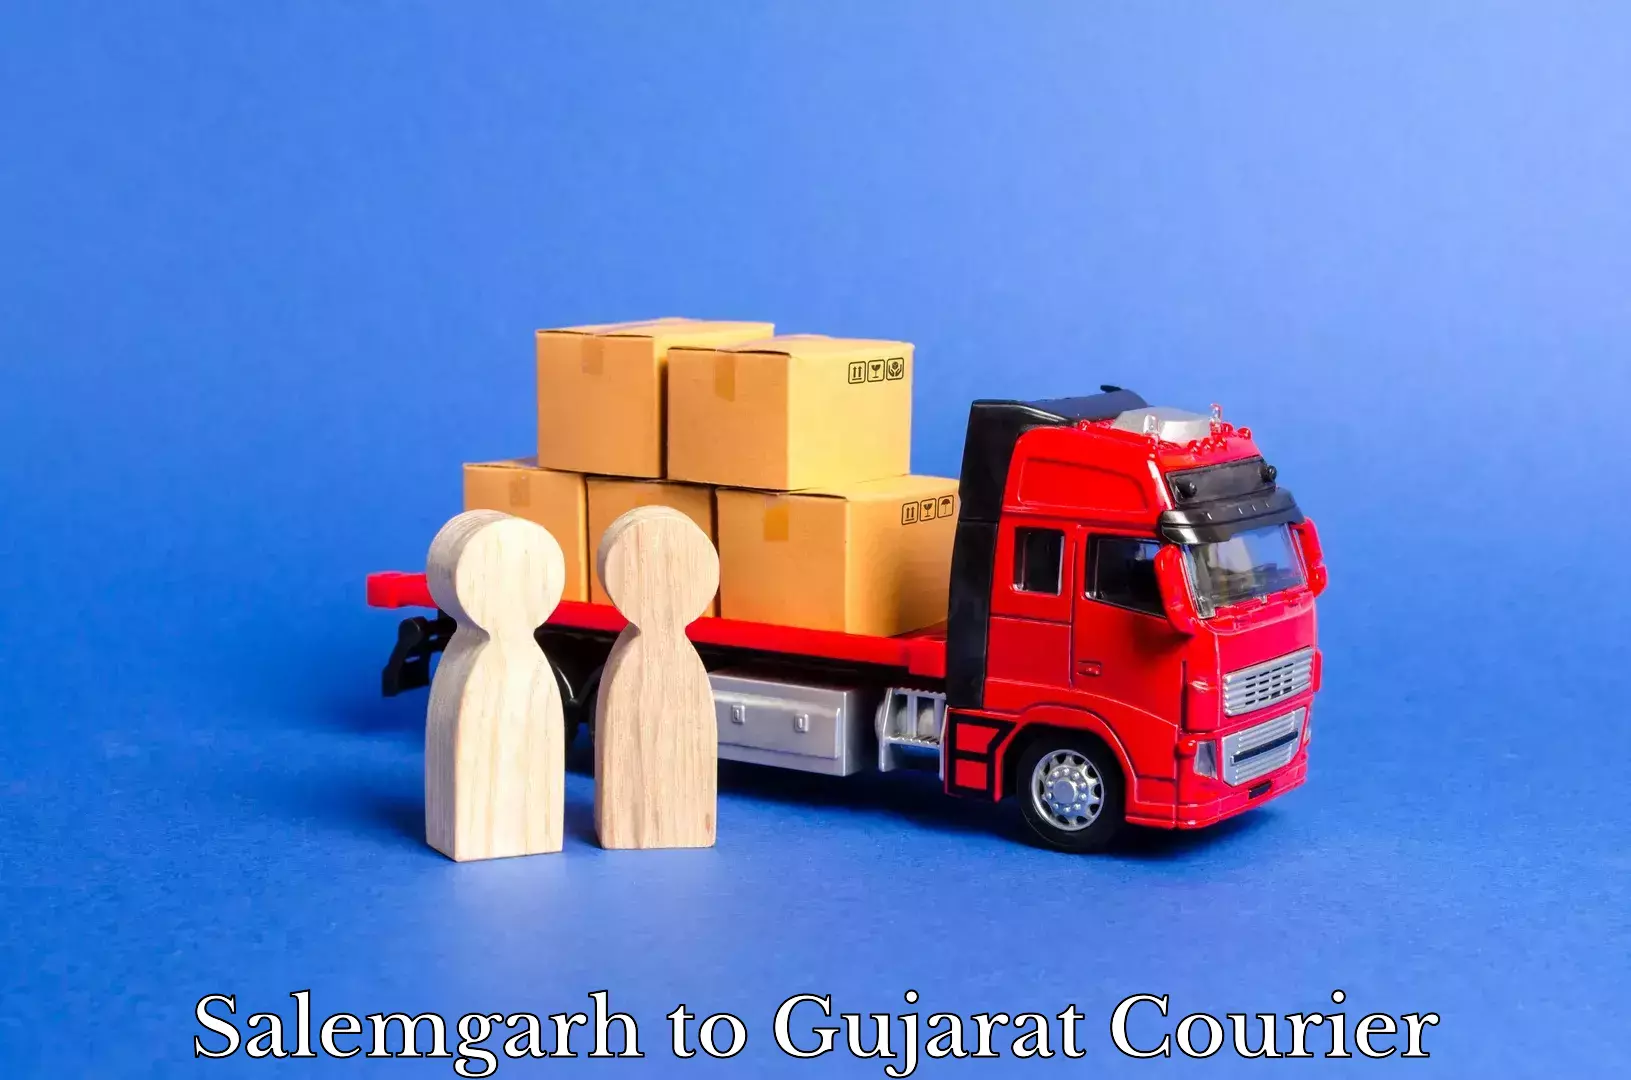 Courier service innovation Salemgarh to Gujarat